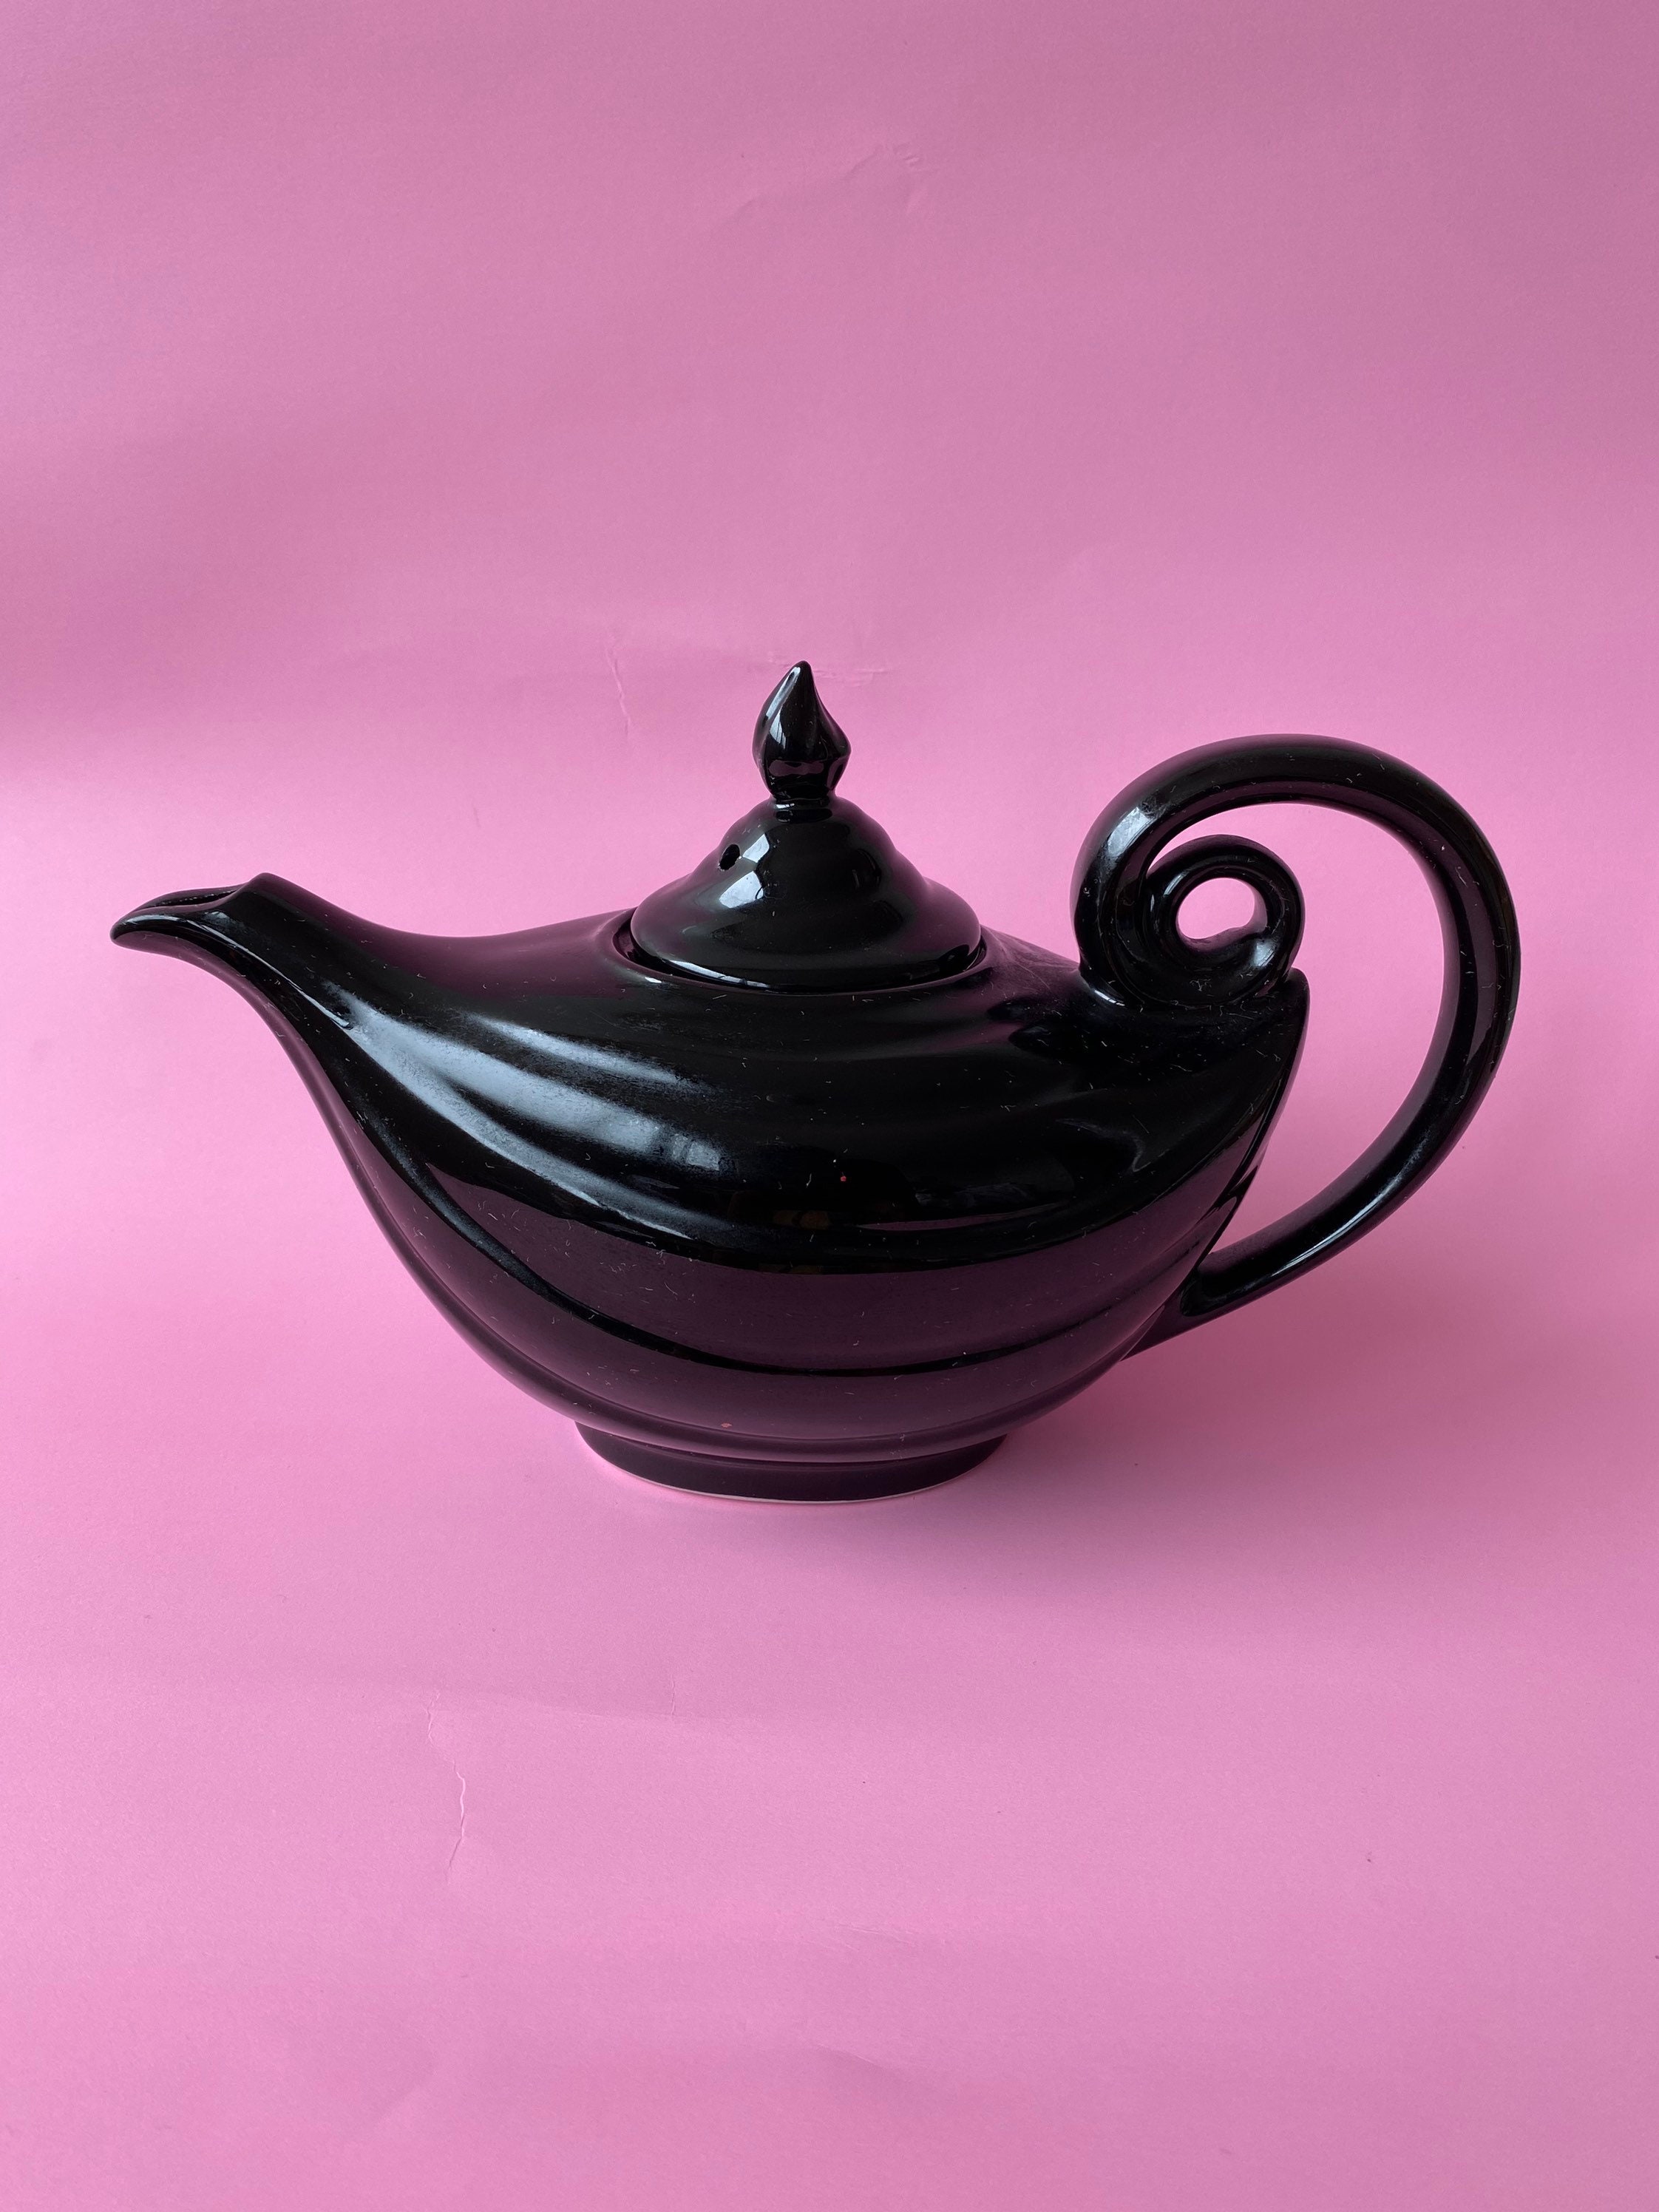 Disney Store Aladdin Ceramic Tea Set Genie Magic Lamp 1 Teapot And 2 Tea Cups 